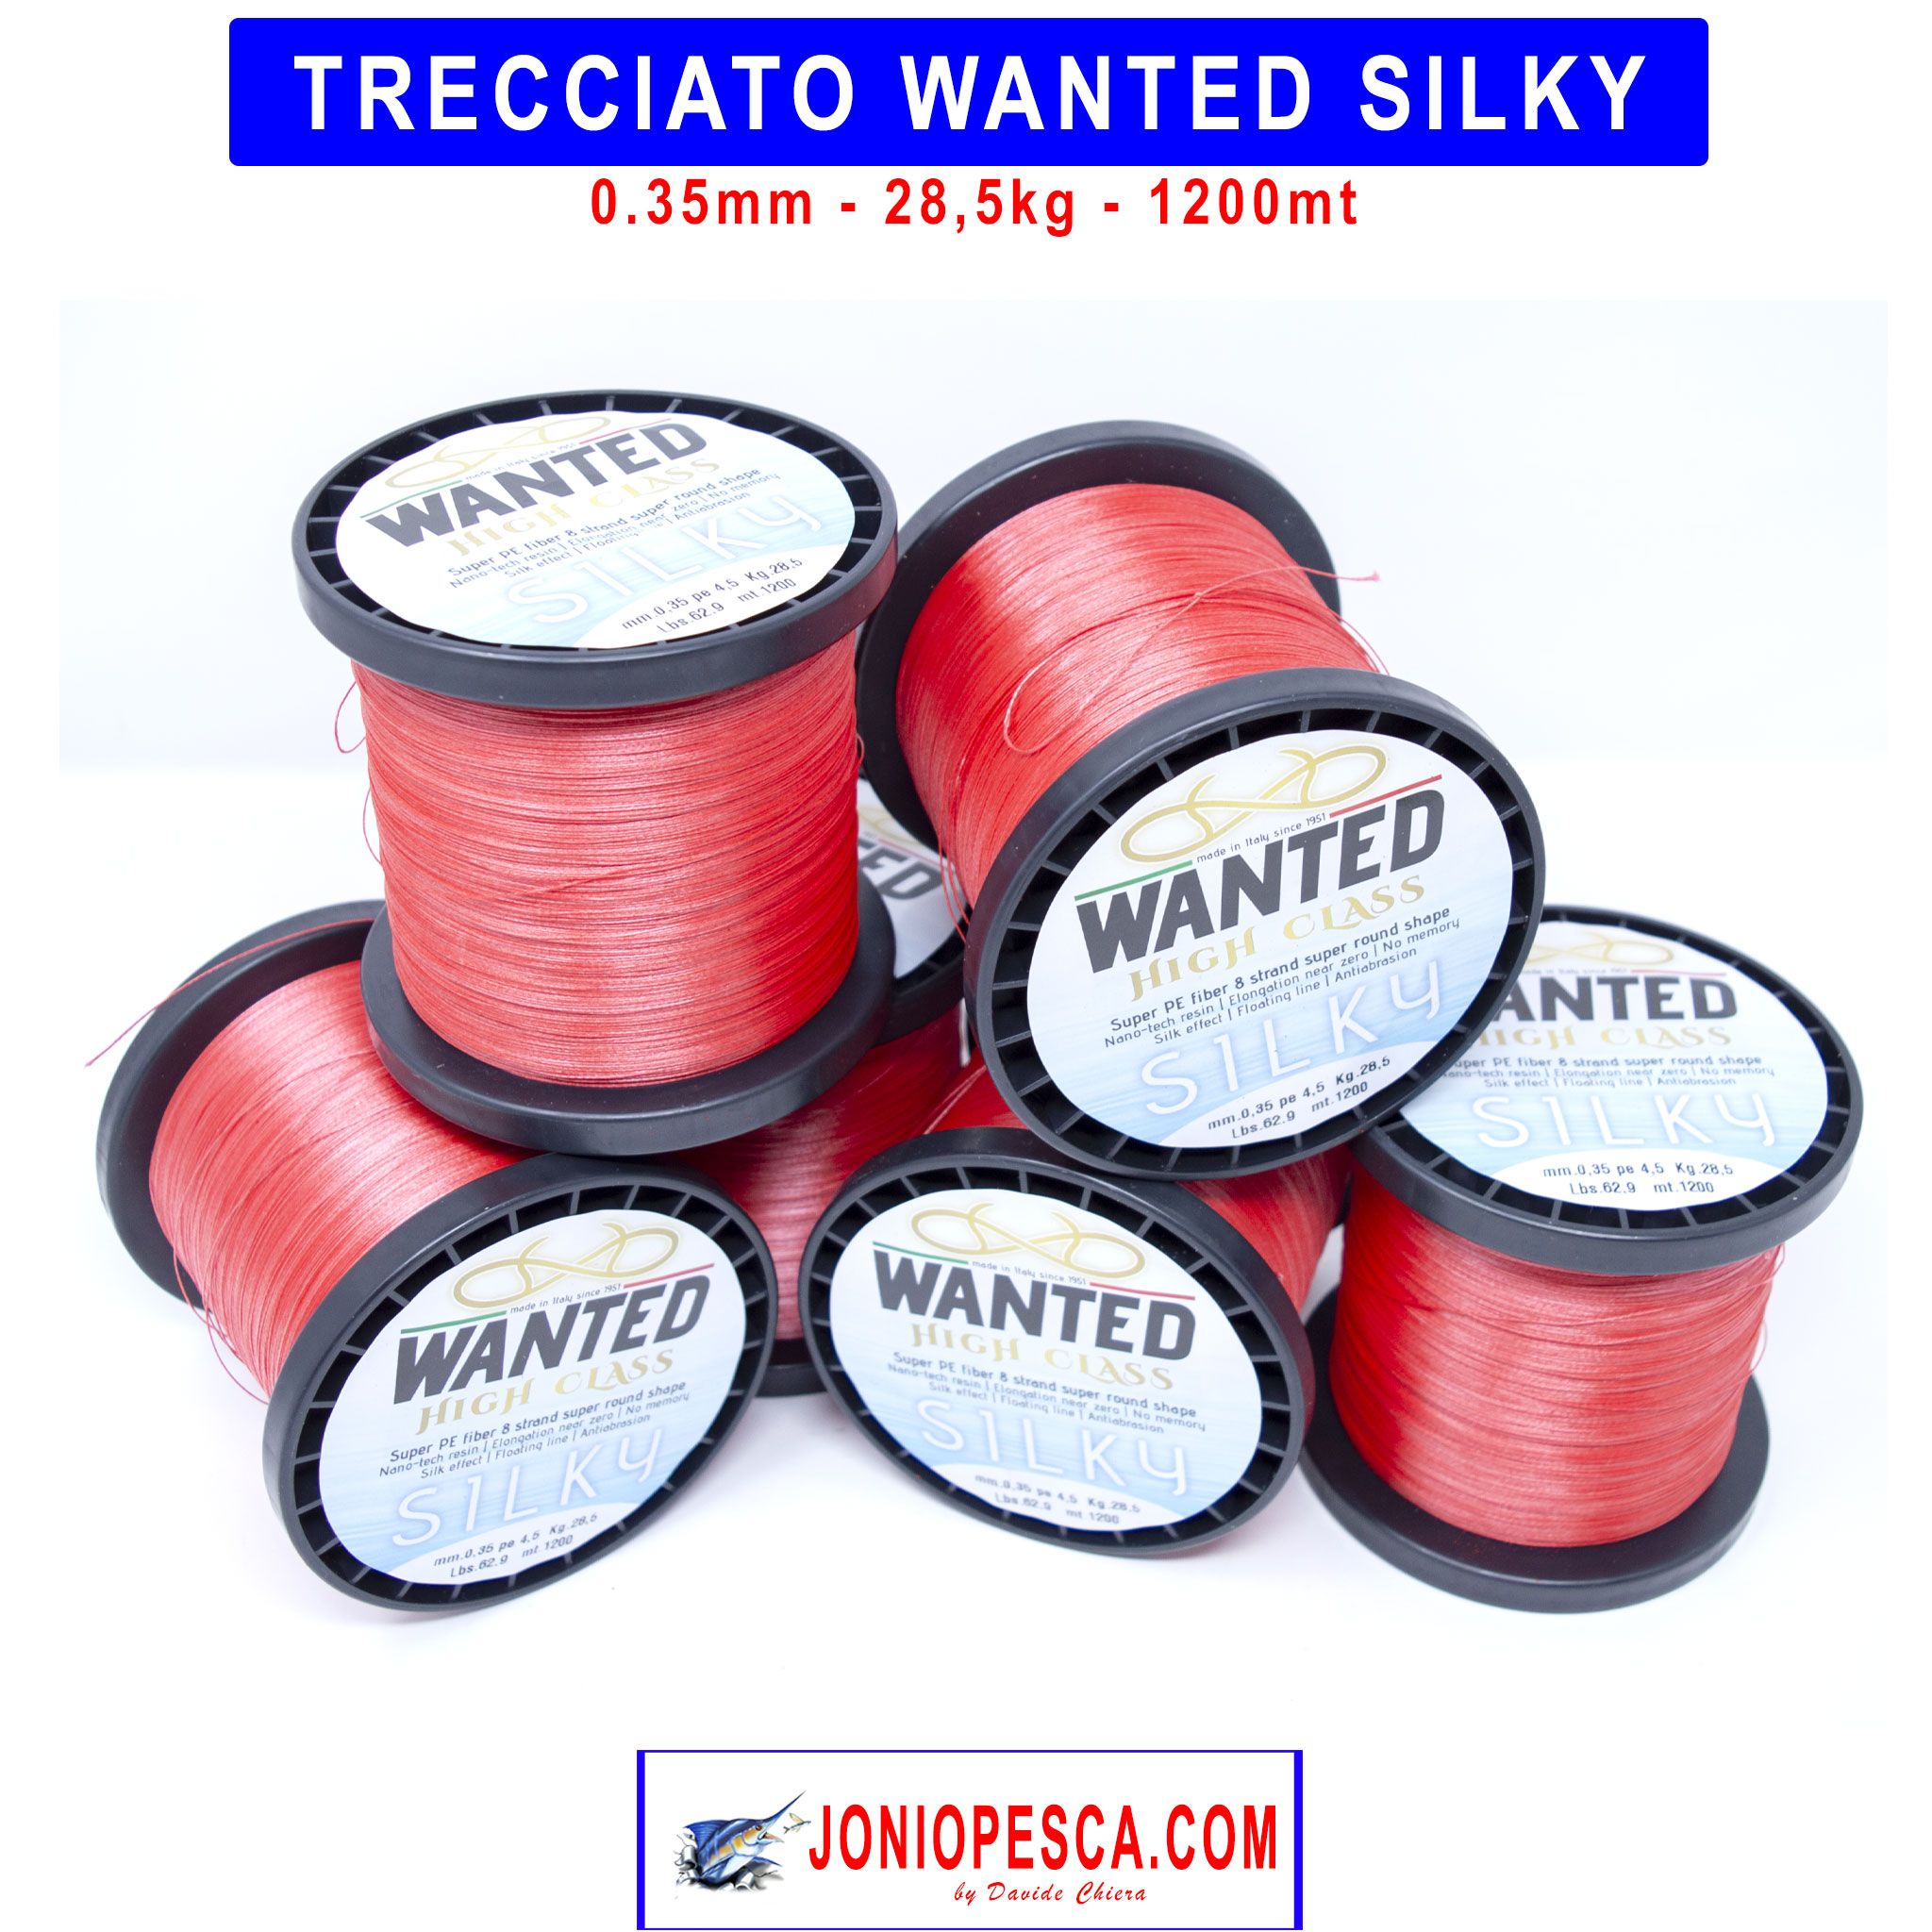 trecciato-wanted-silky-1200mt-2